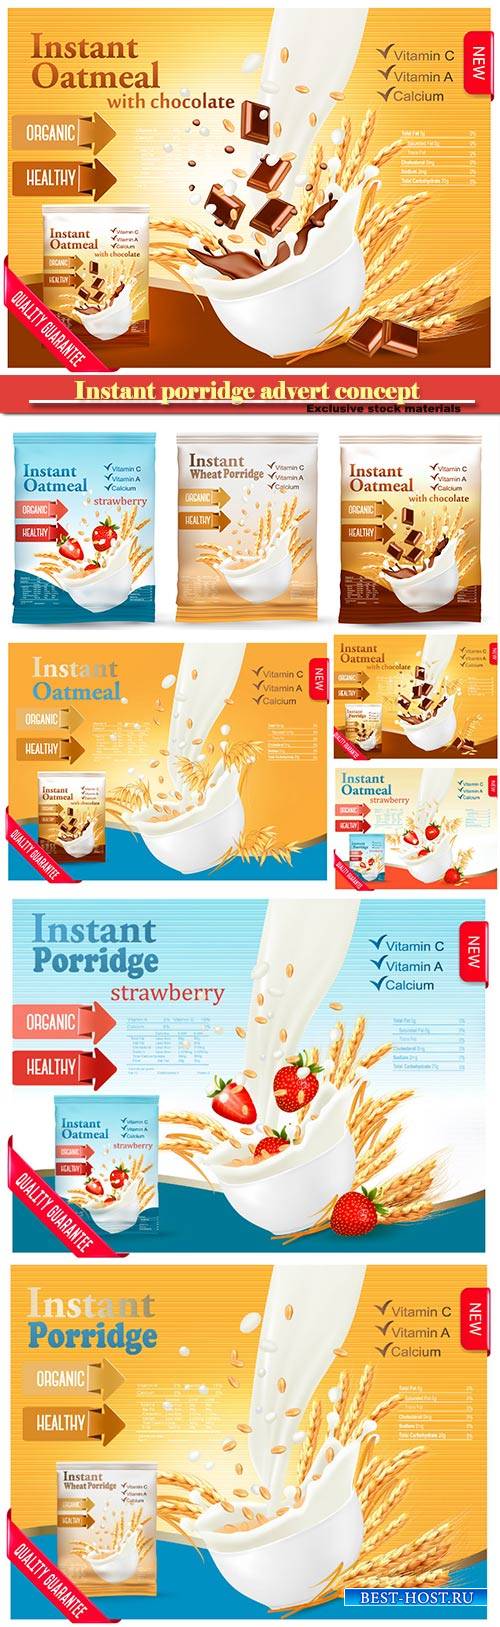 Instant porridge advert concept, design template vector